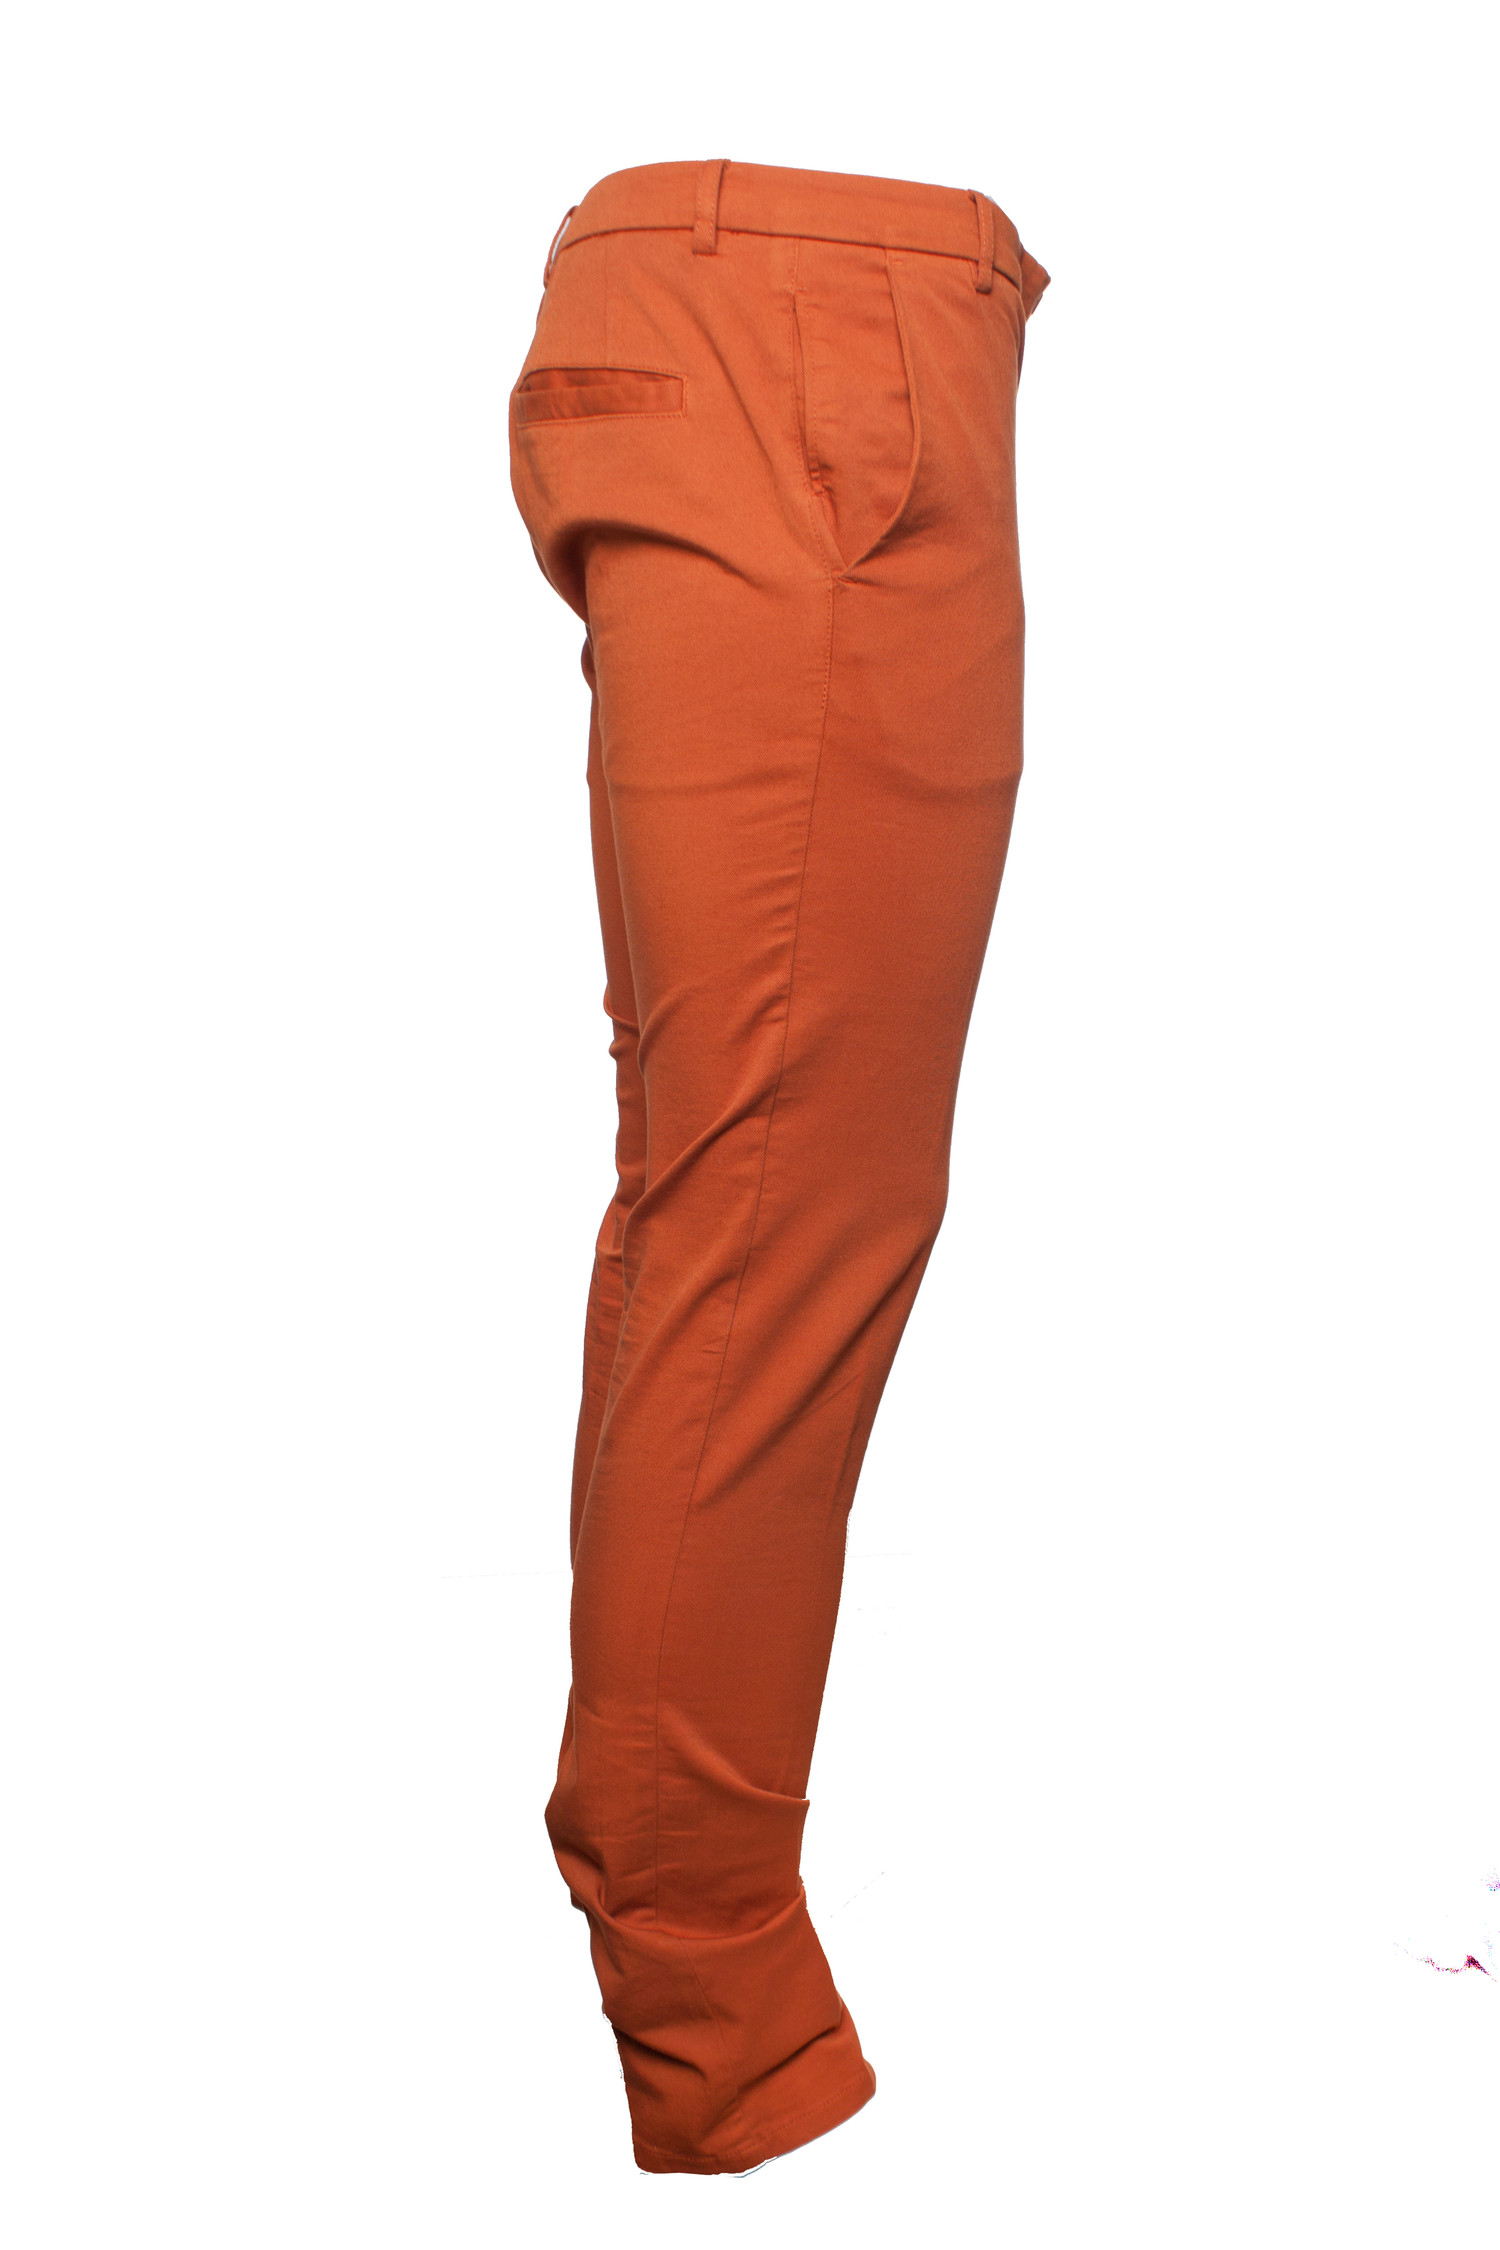 20 Rust Pants ideas  autumn fashion clothes my style